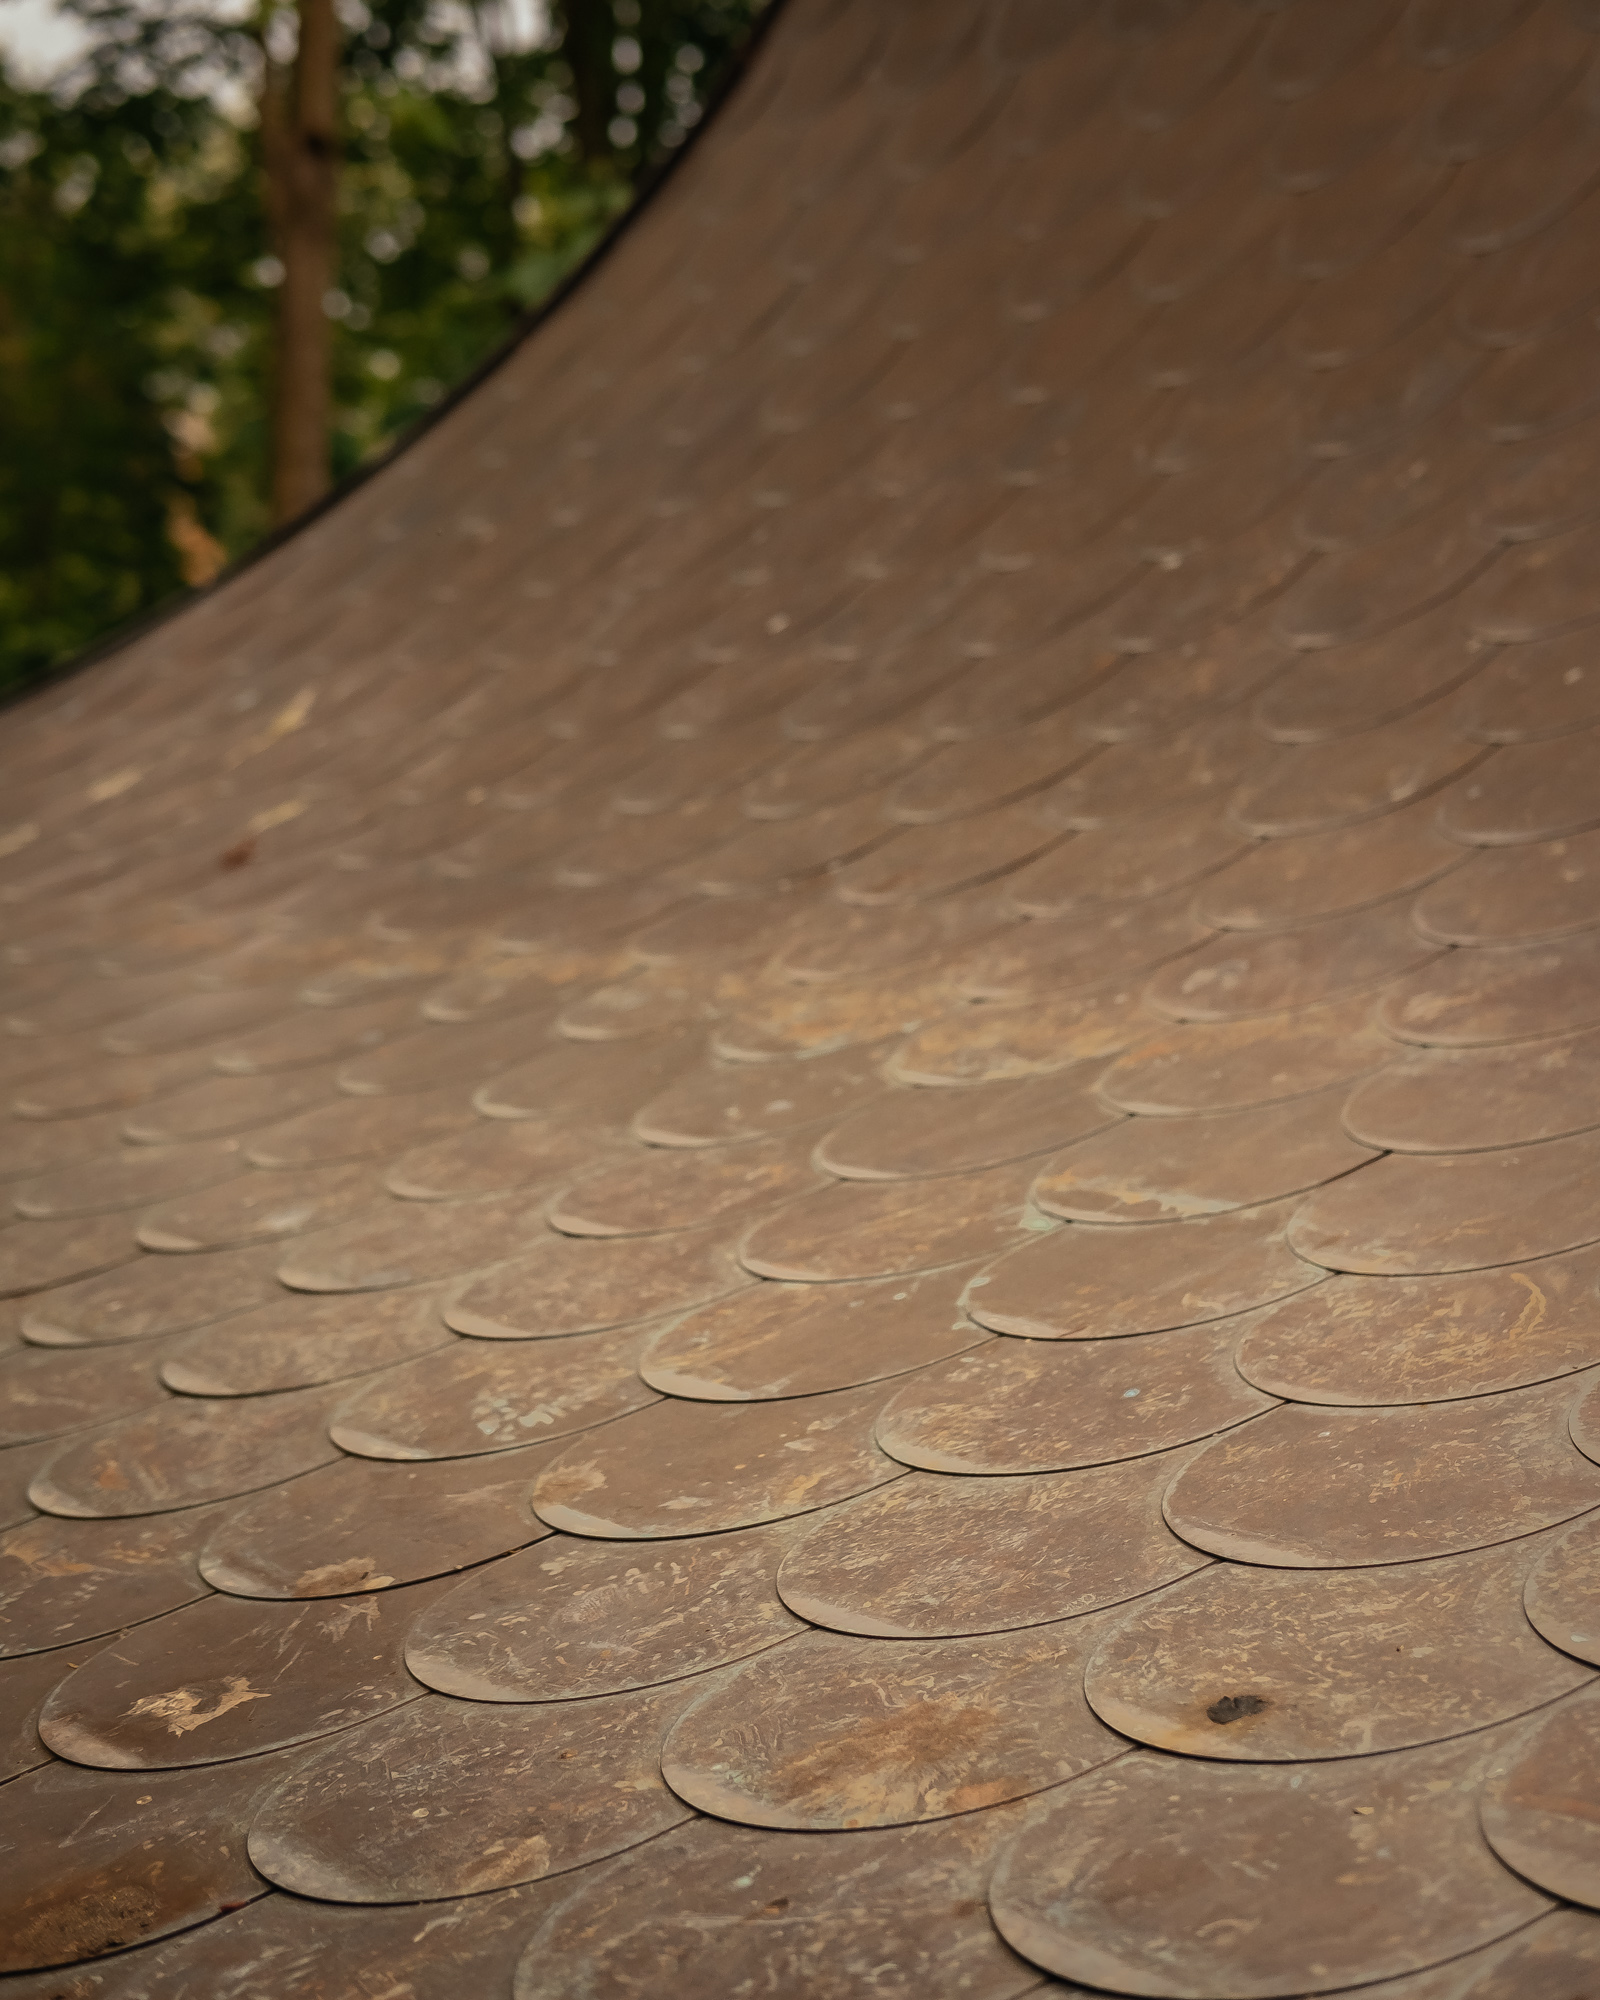 Copper shingle roof details